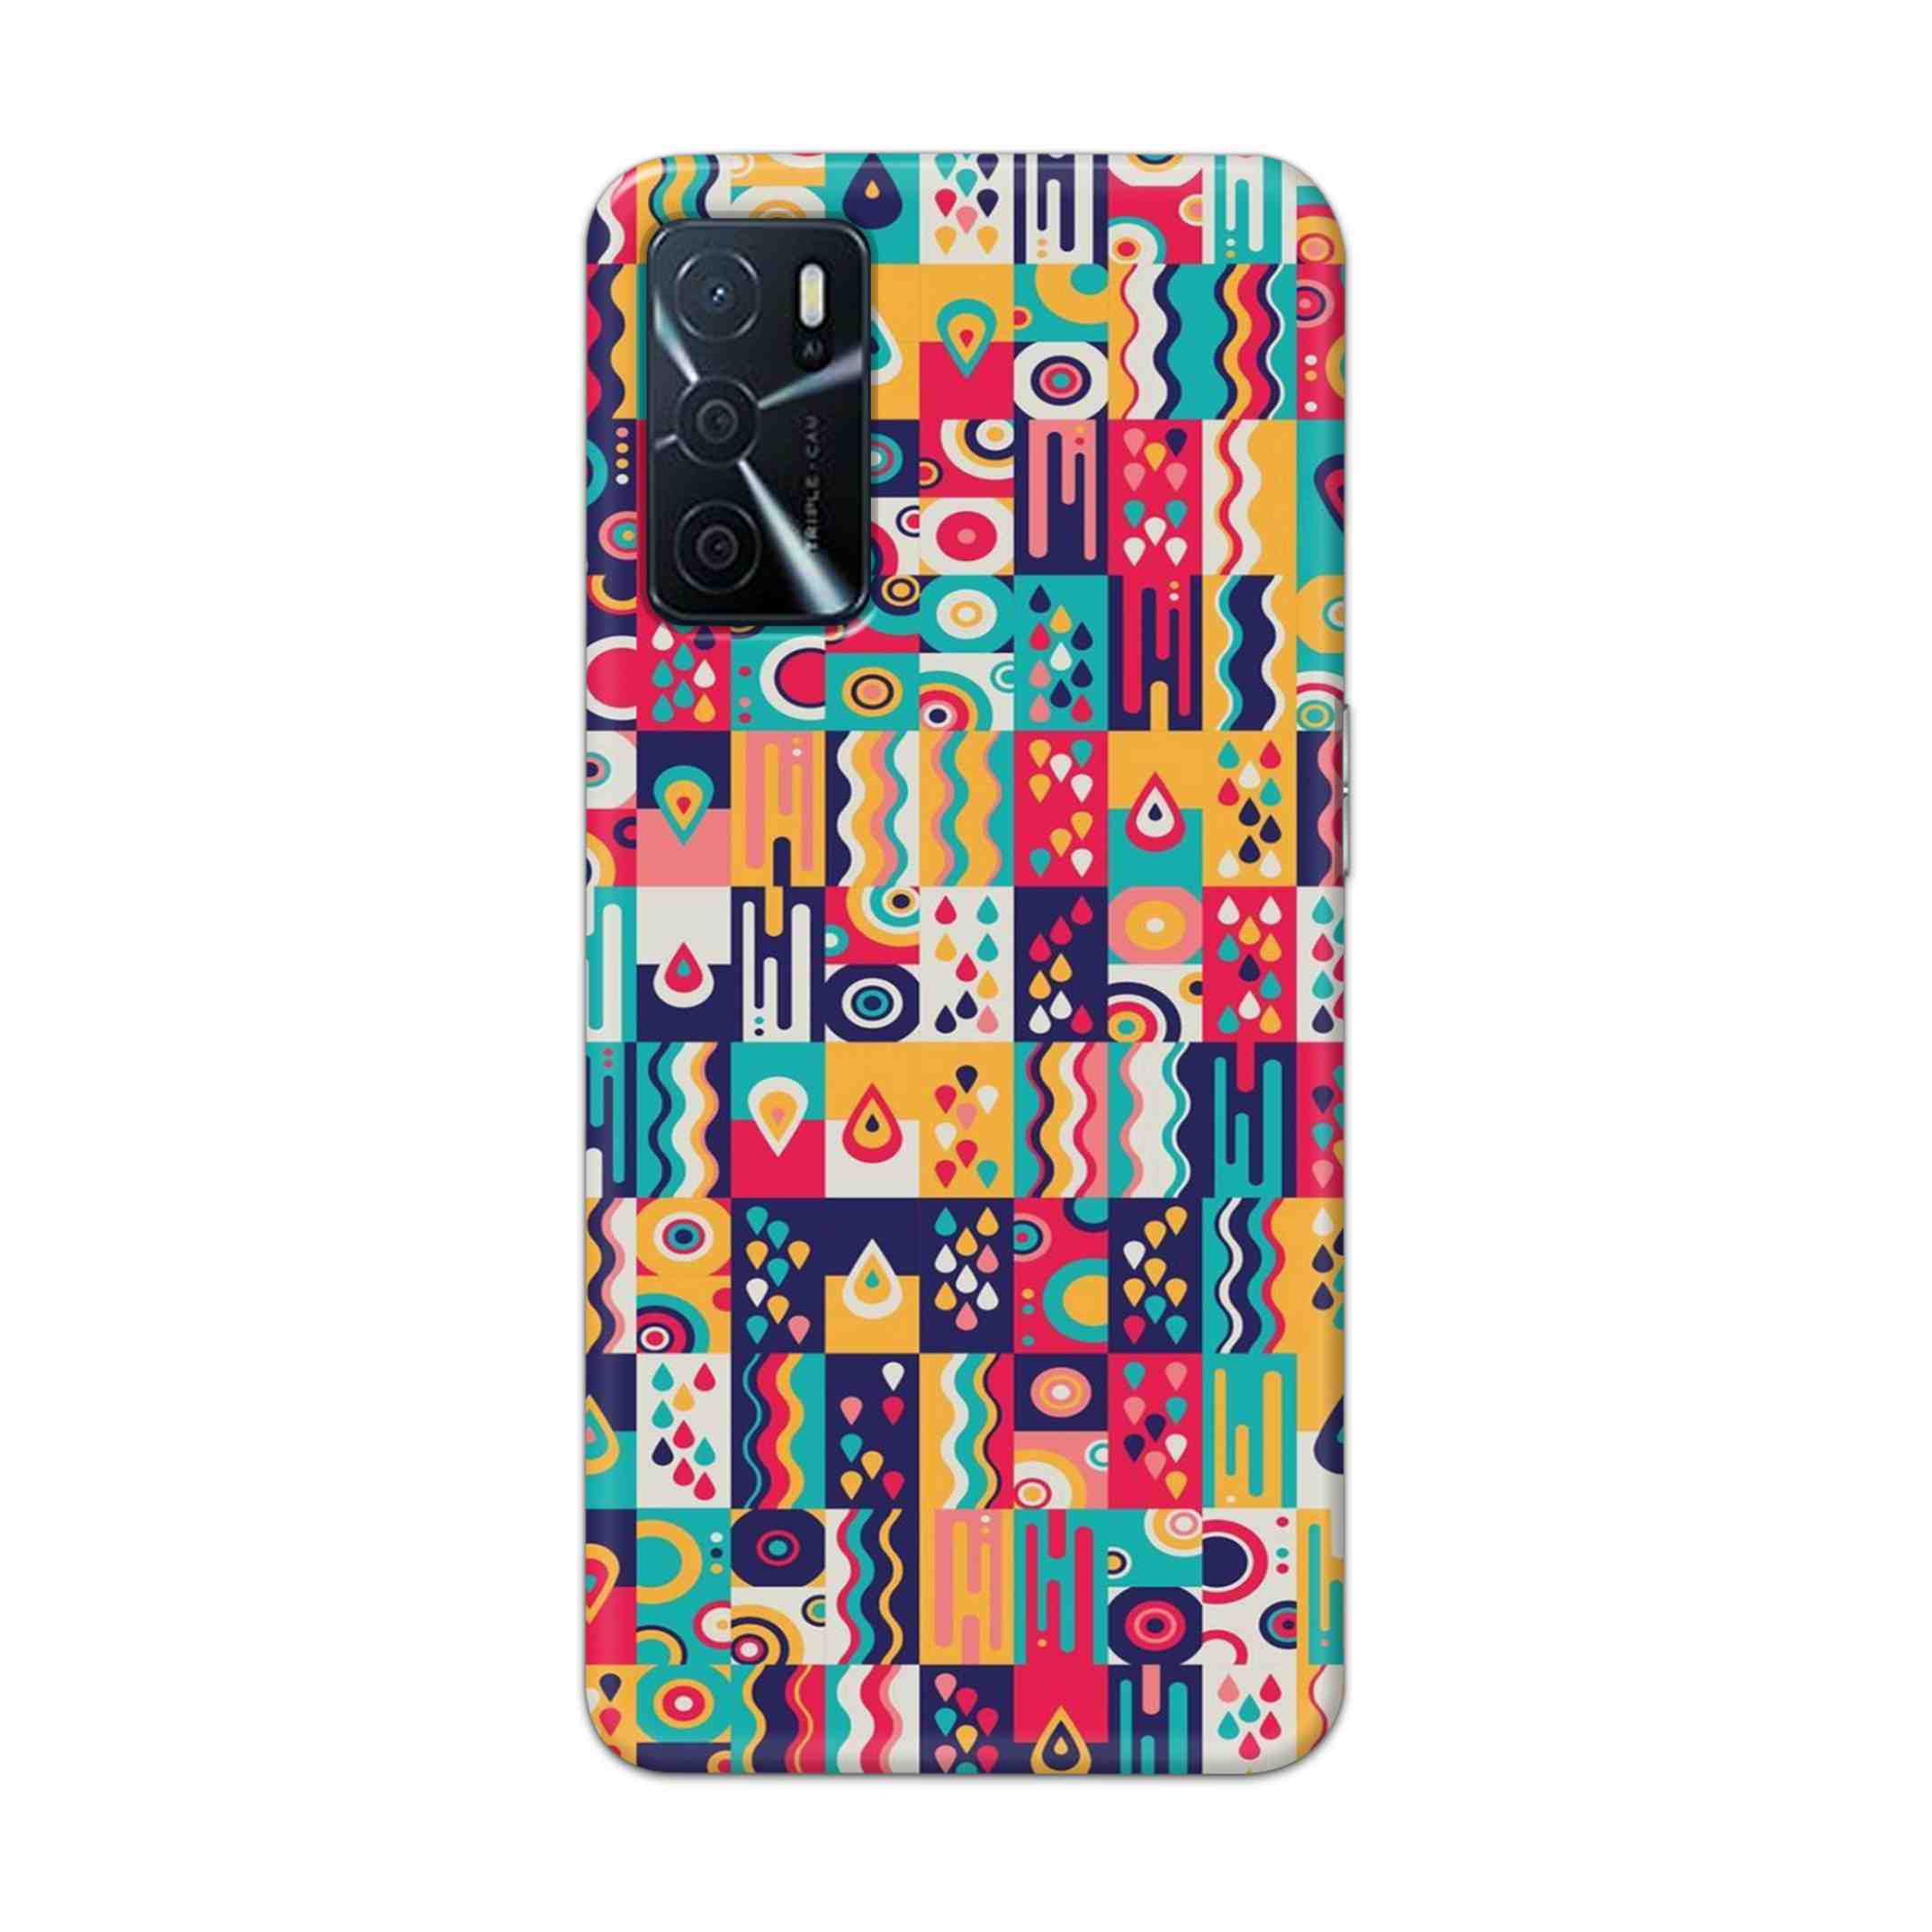 Buy Art Hard Back Mobile Phone Case Cover For Oppo A16 Online